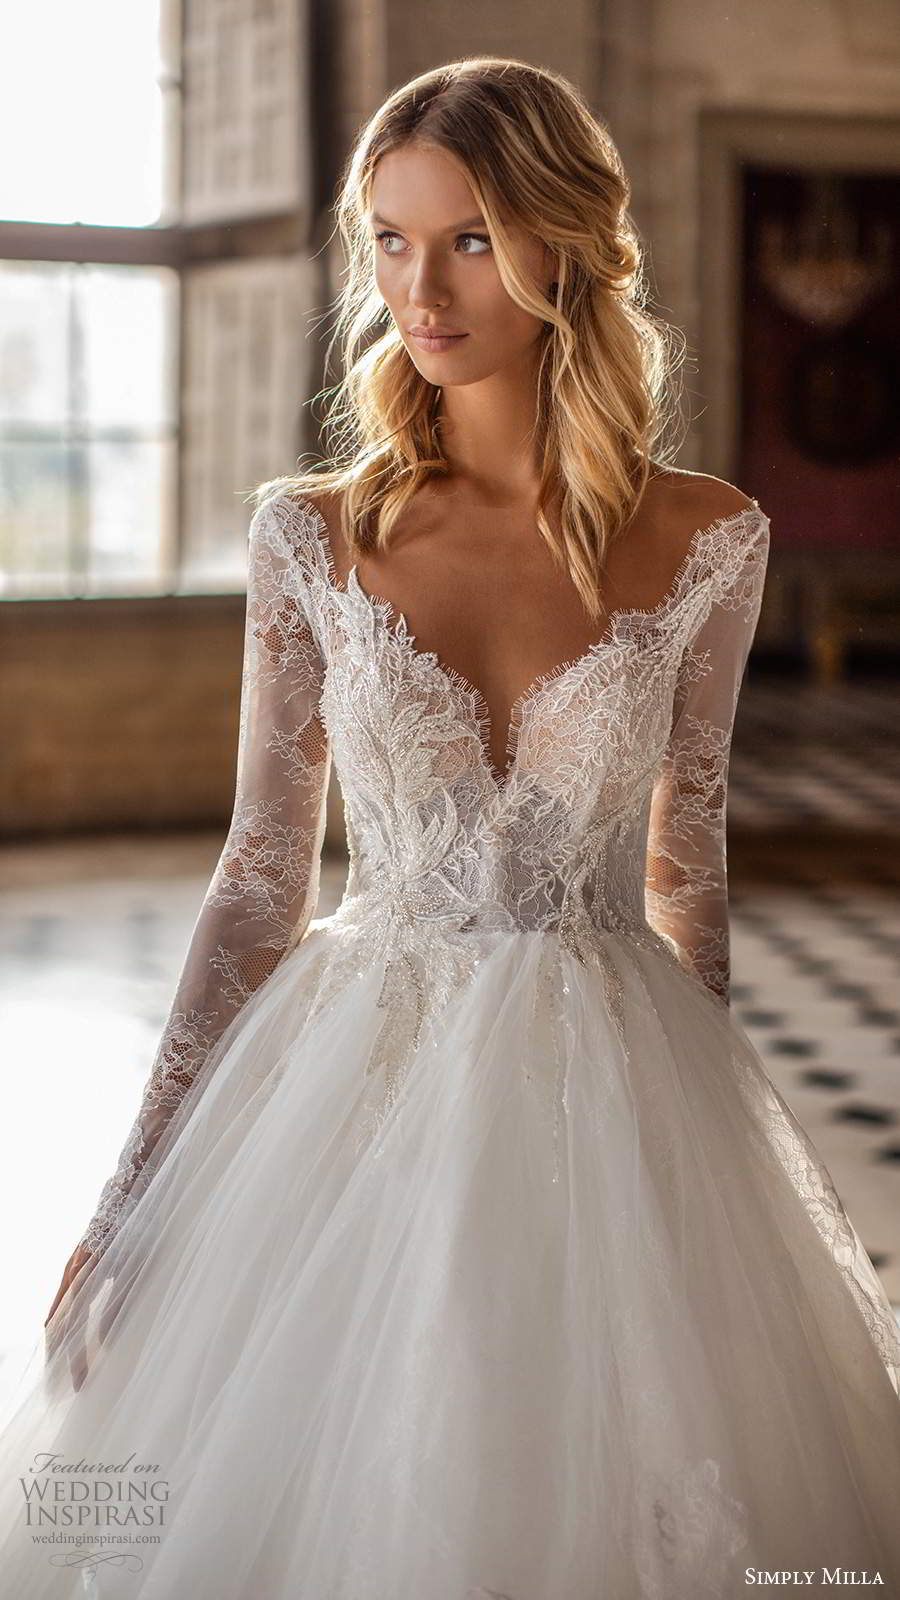 simply milla nova 2020 bridal long sleeves off shoulder sweetheart neckline embellished bodice a line ball gown wedding dress chapel train (7) zv